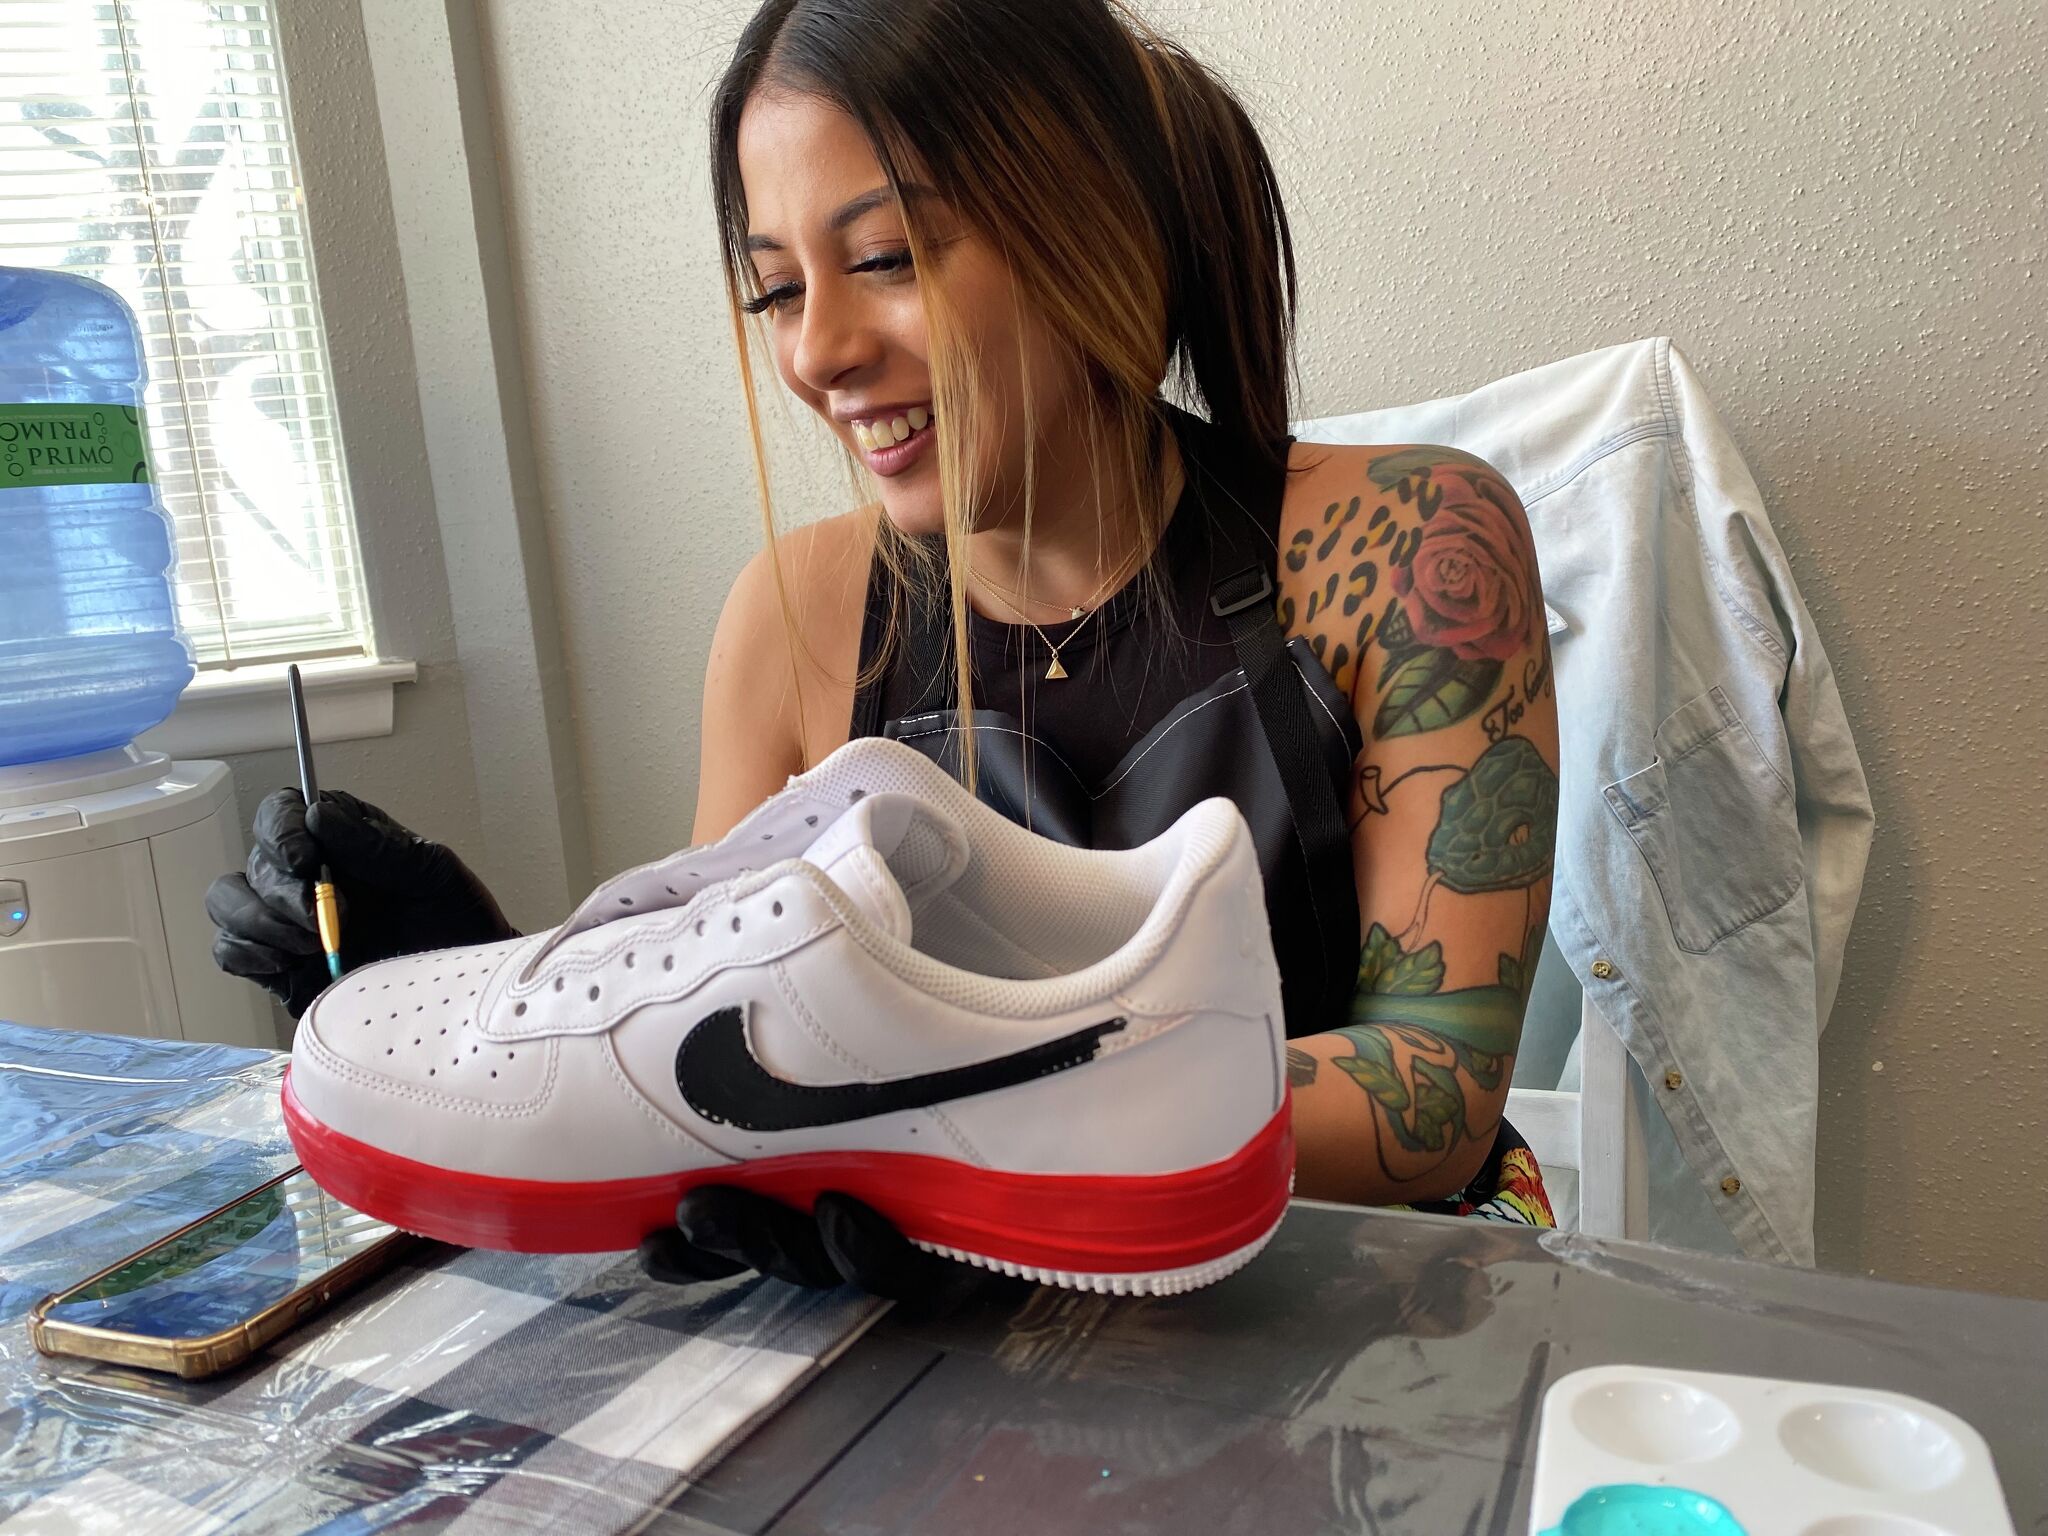 Kustom Kate is a new designer putting San Antonio soul on soles